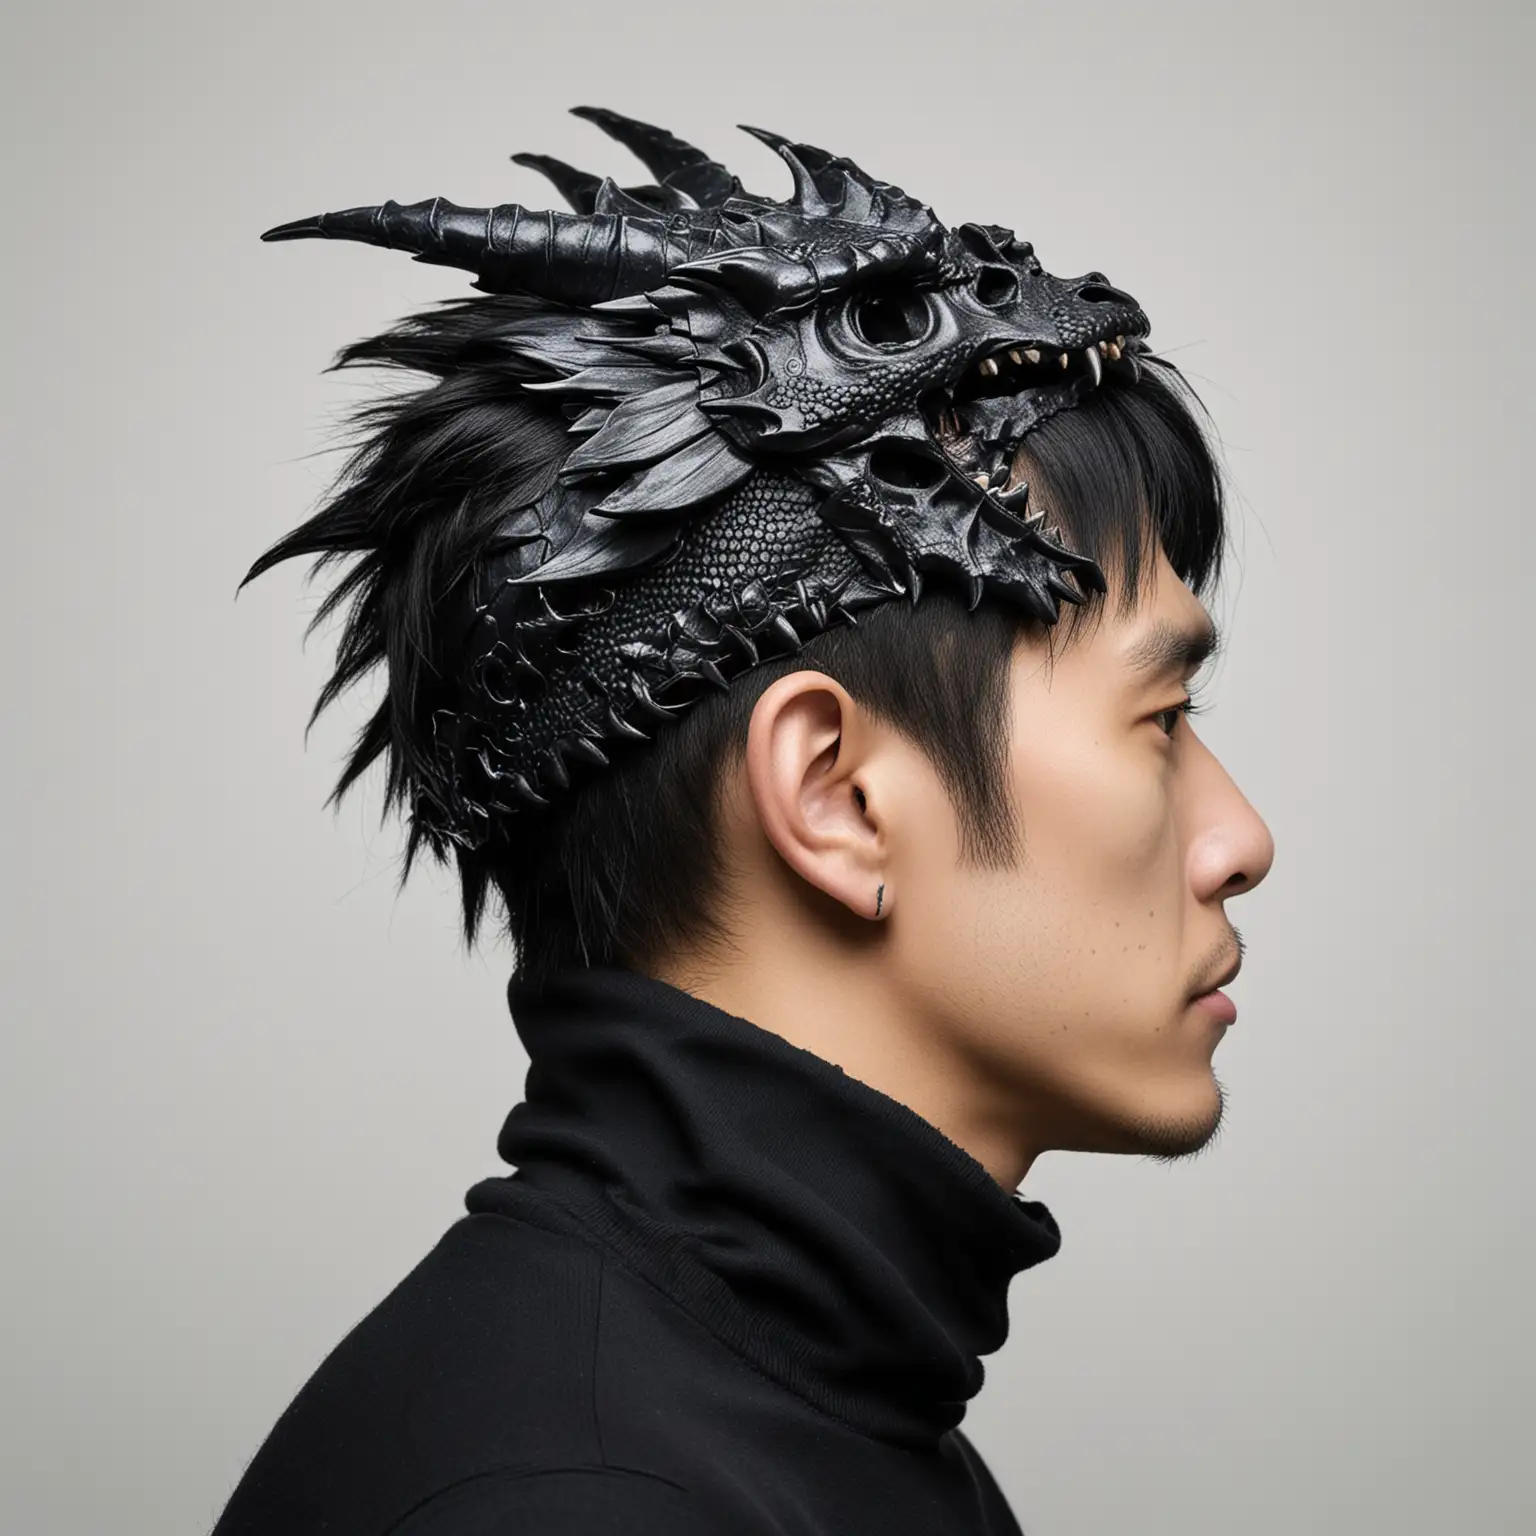 Portrait photograph, side profile view, Japanese man with black metal dragon skull crown, black turtleneck, white background